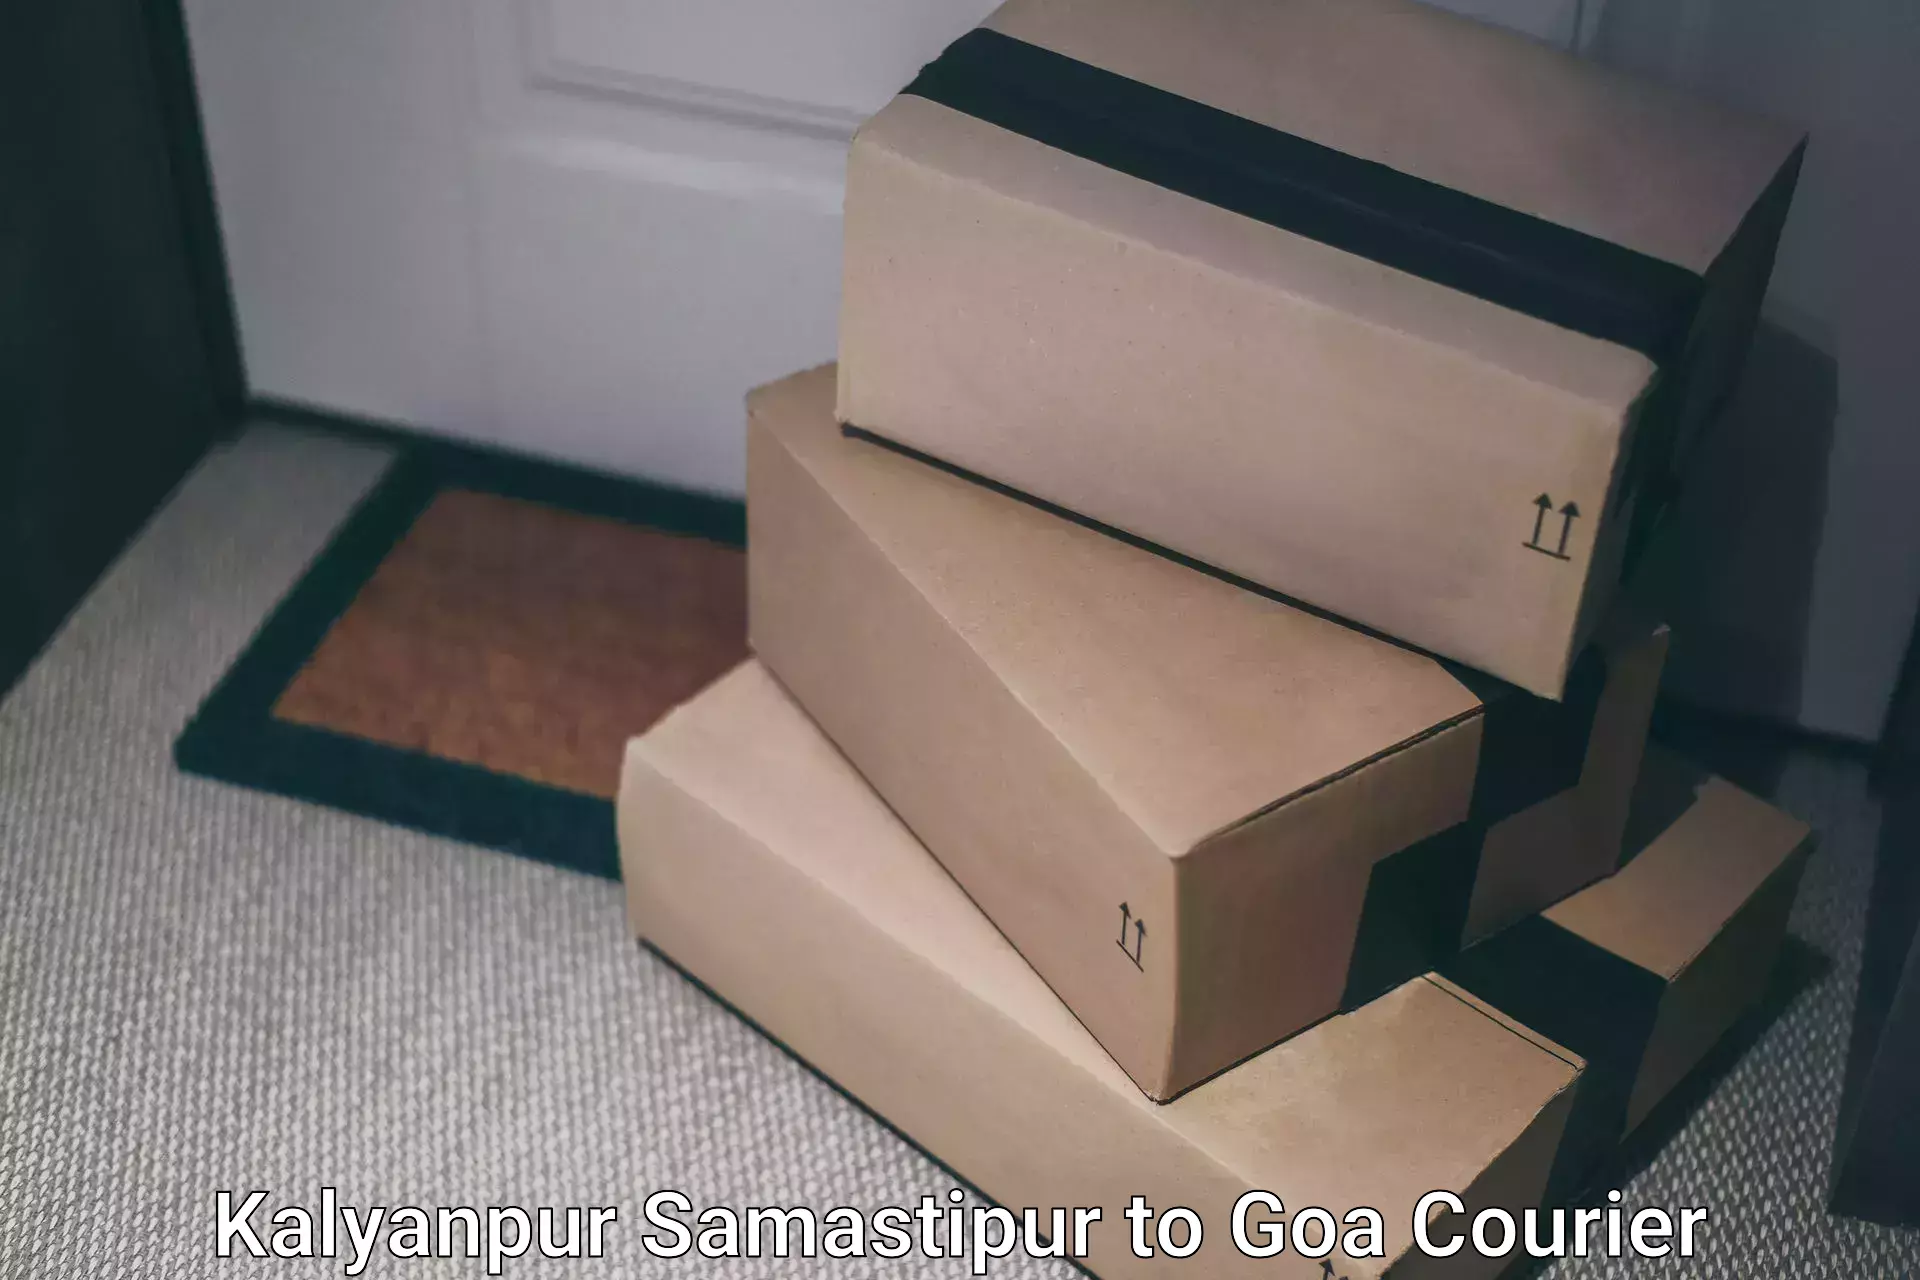 Courier service comparison Kalyanpur Samastipur to Panaji